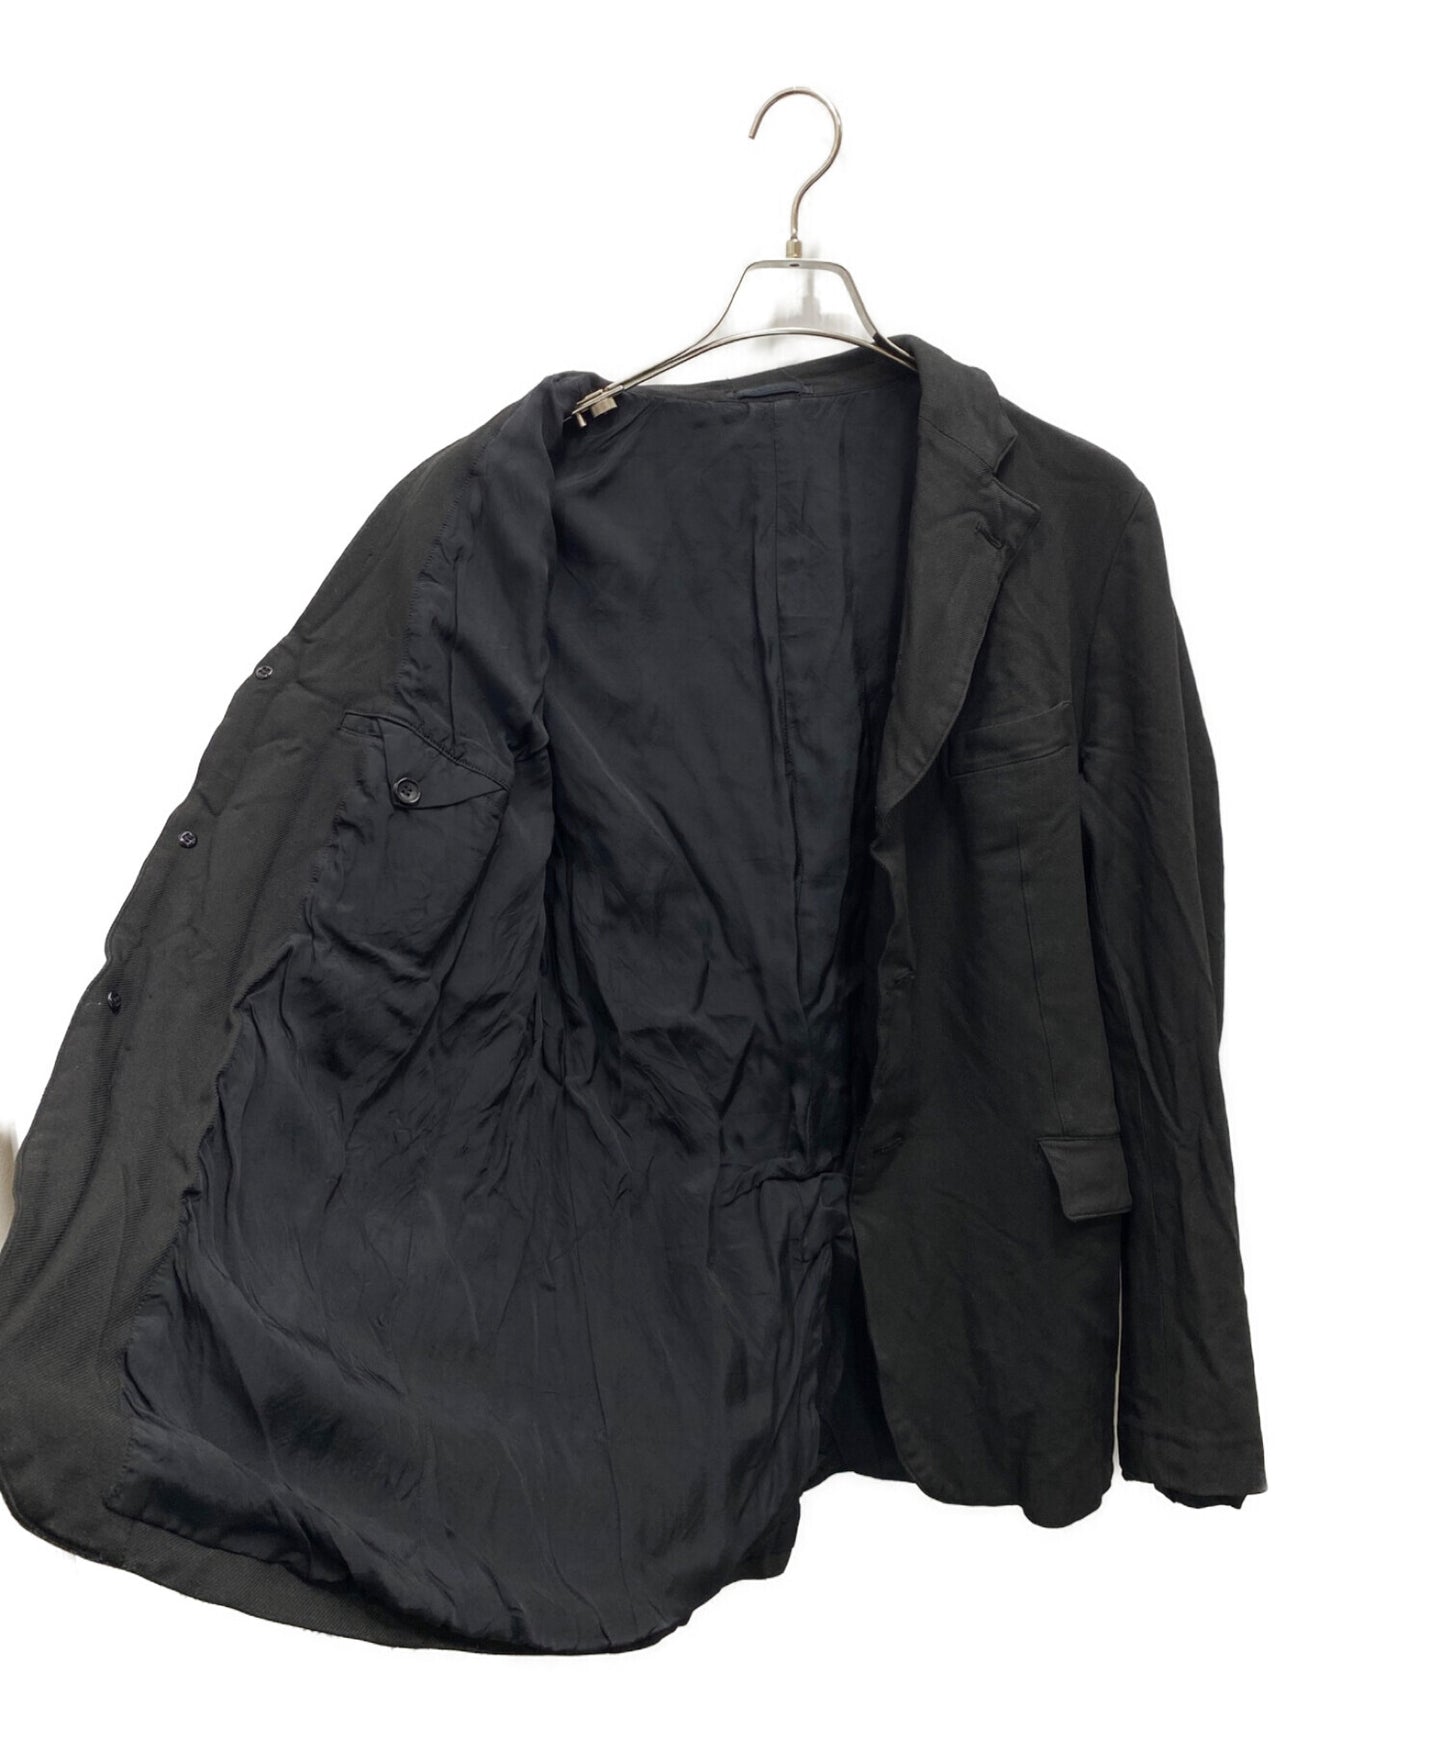 Comme des garcons homme product-dyed poly shrink-wrap jacket ที่ปรับแต่งแล้ว HE-J014